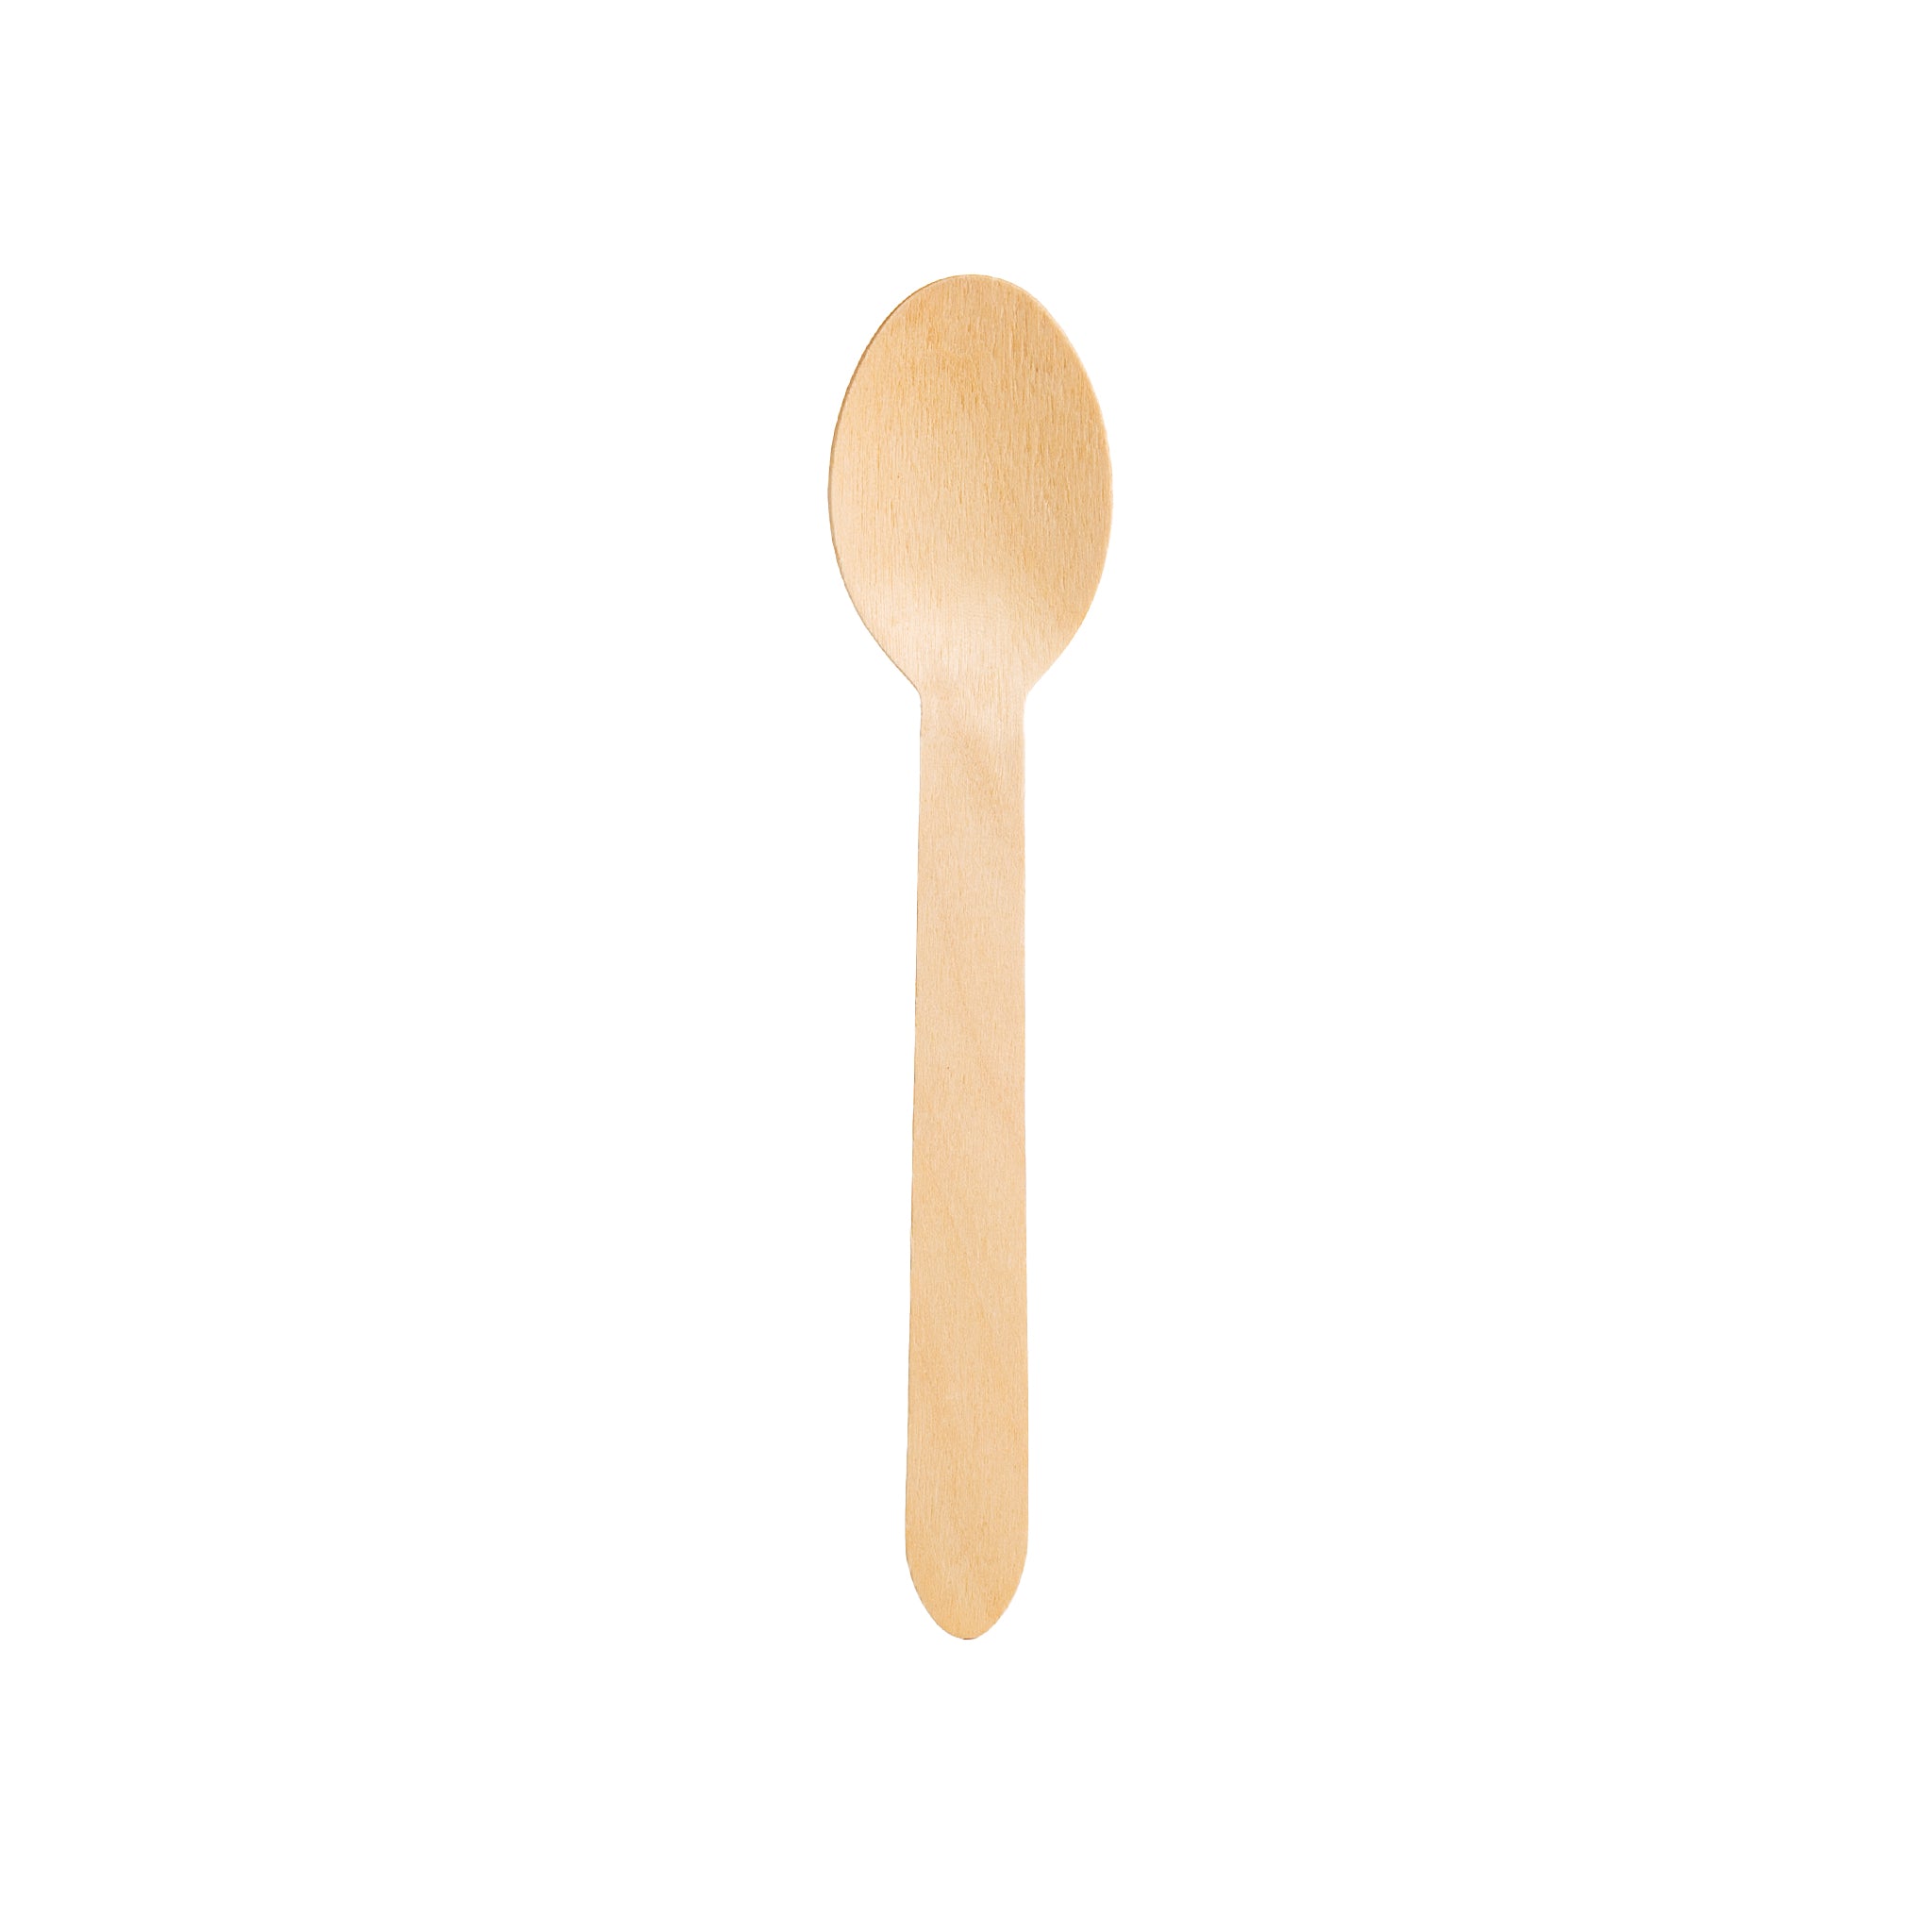 eko higiena disposable wooden spatulas